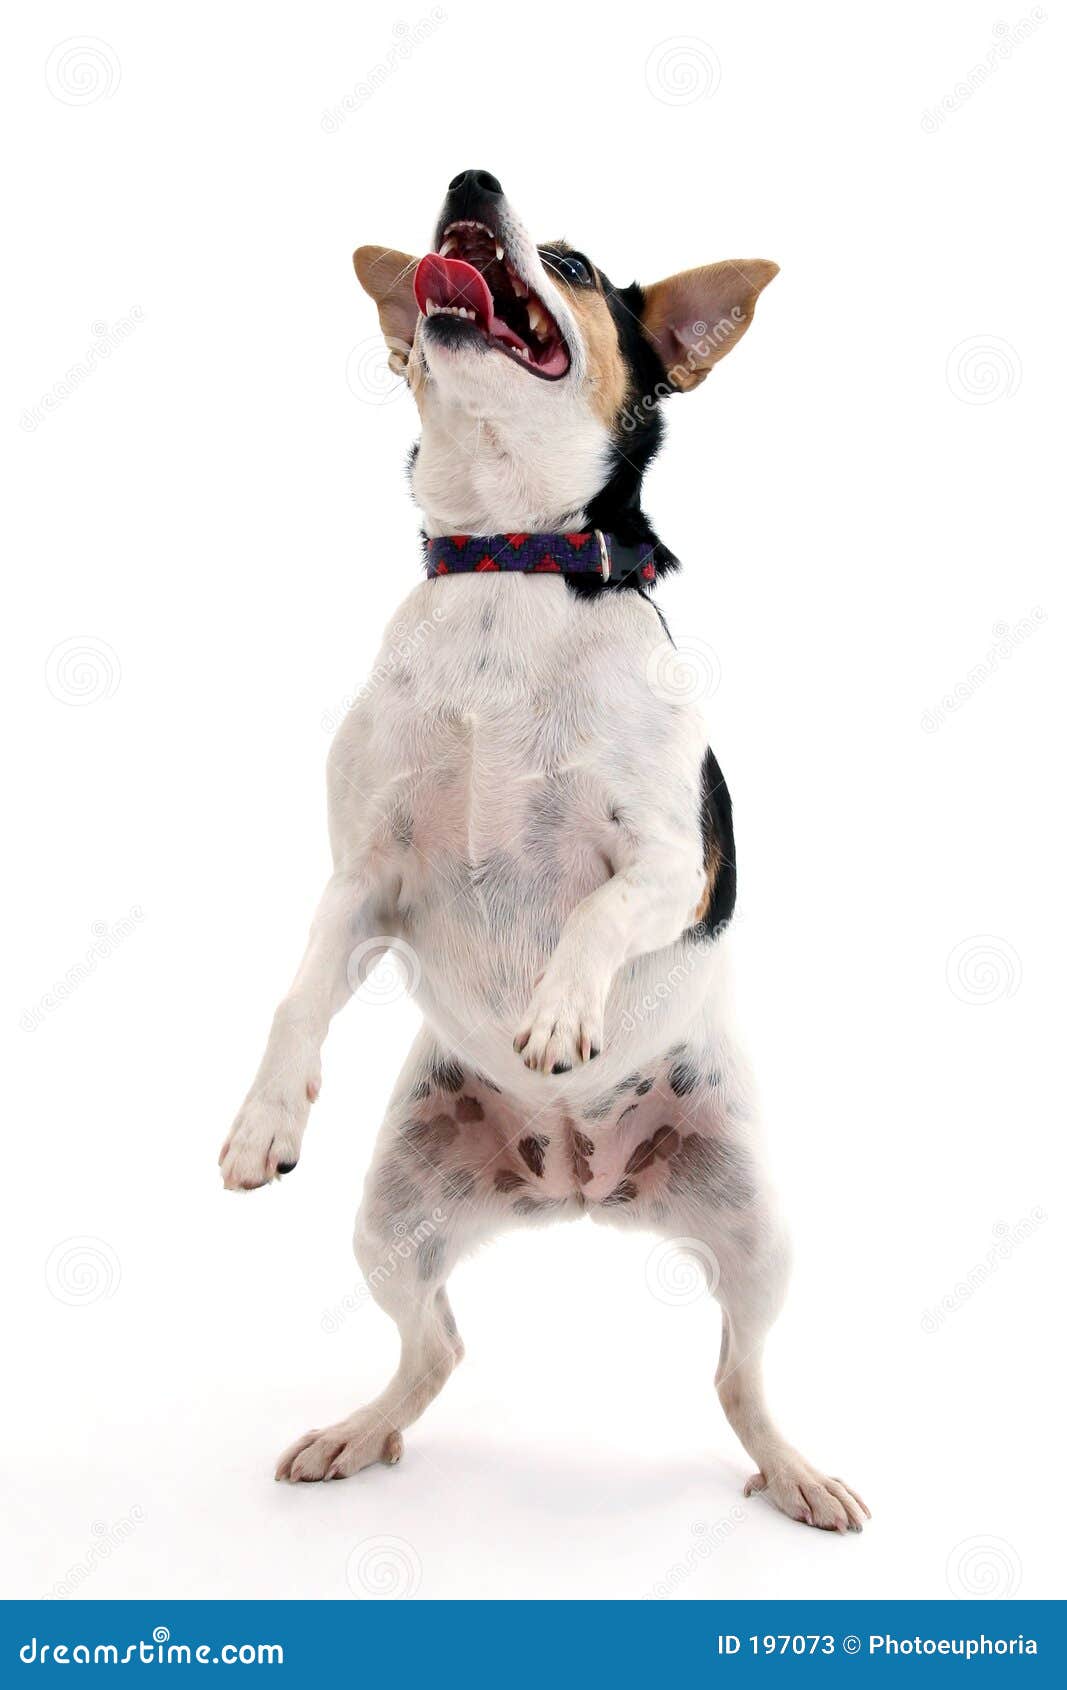 dancing dog clipart - photo #42